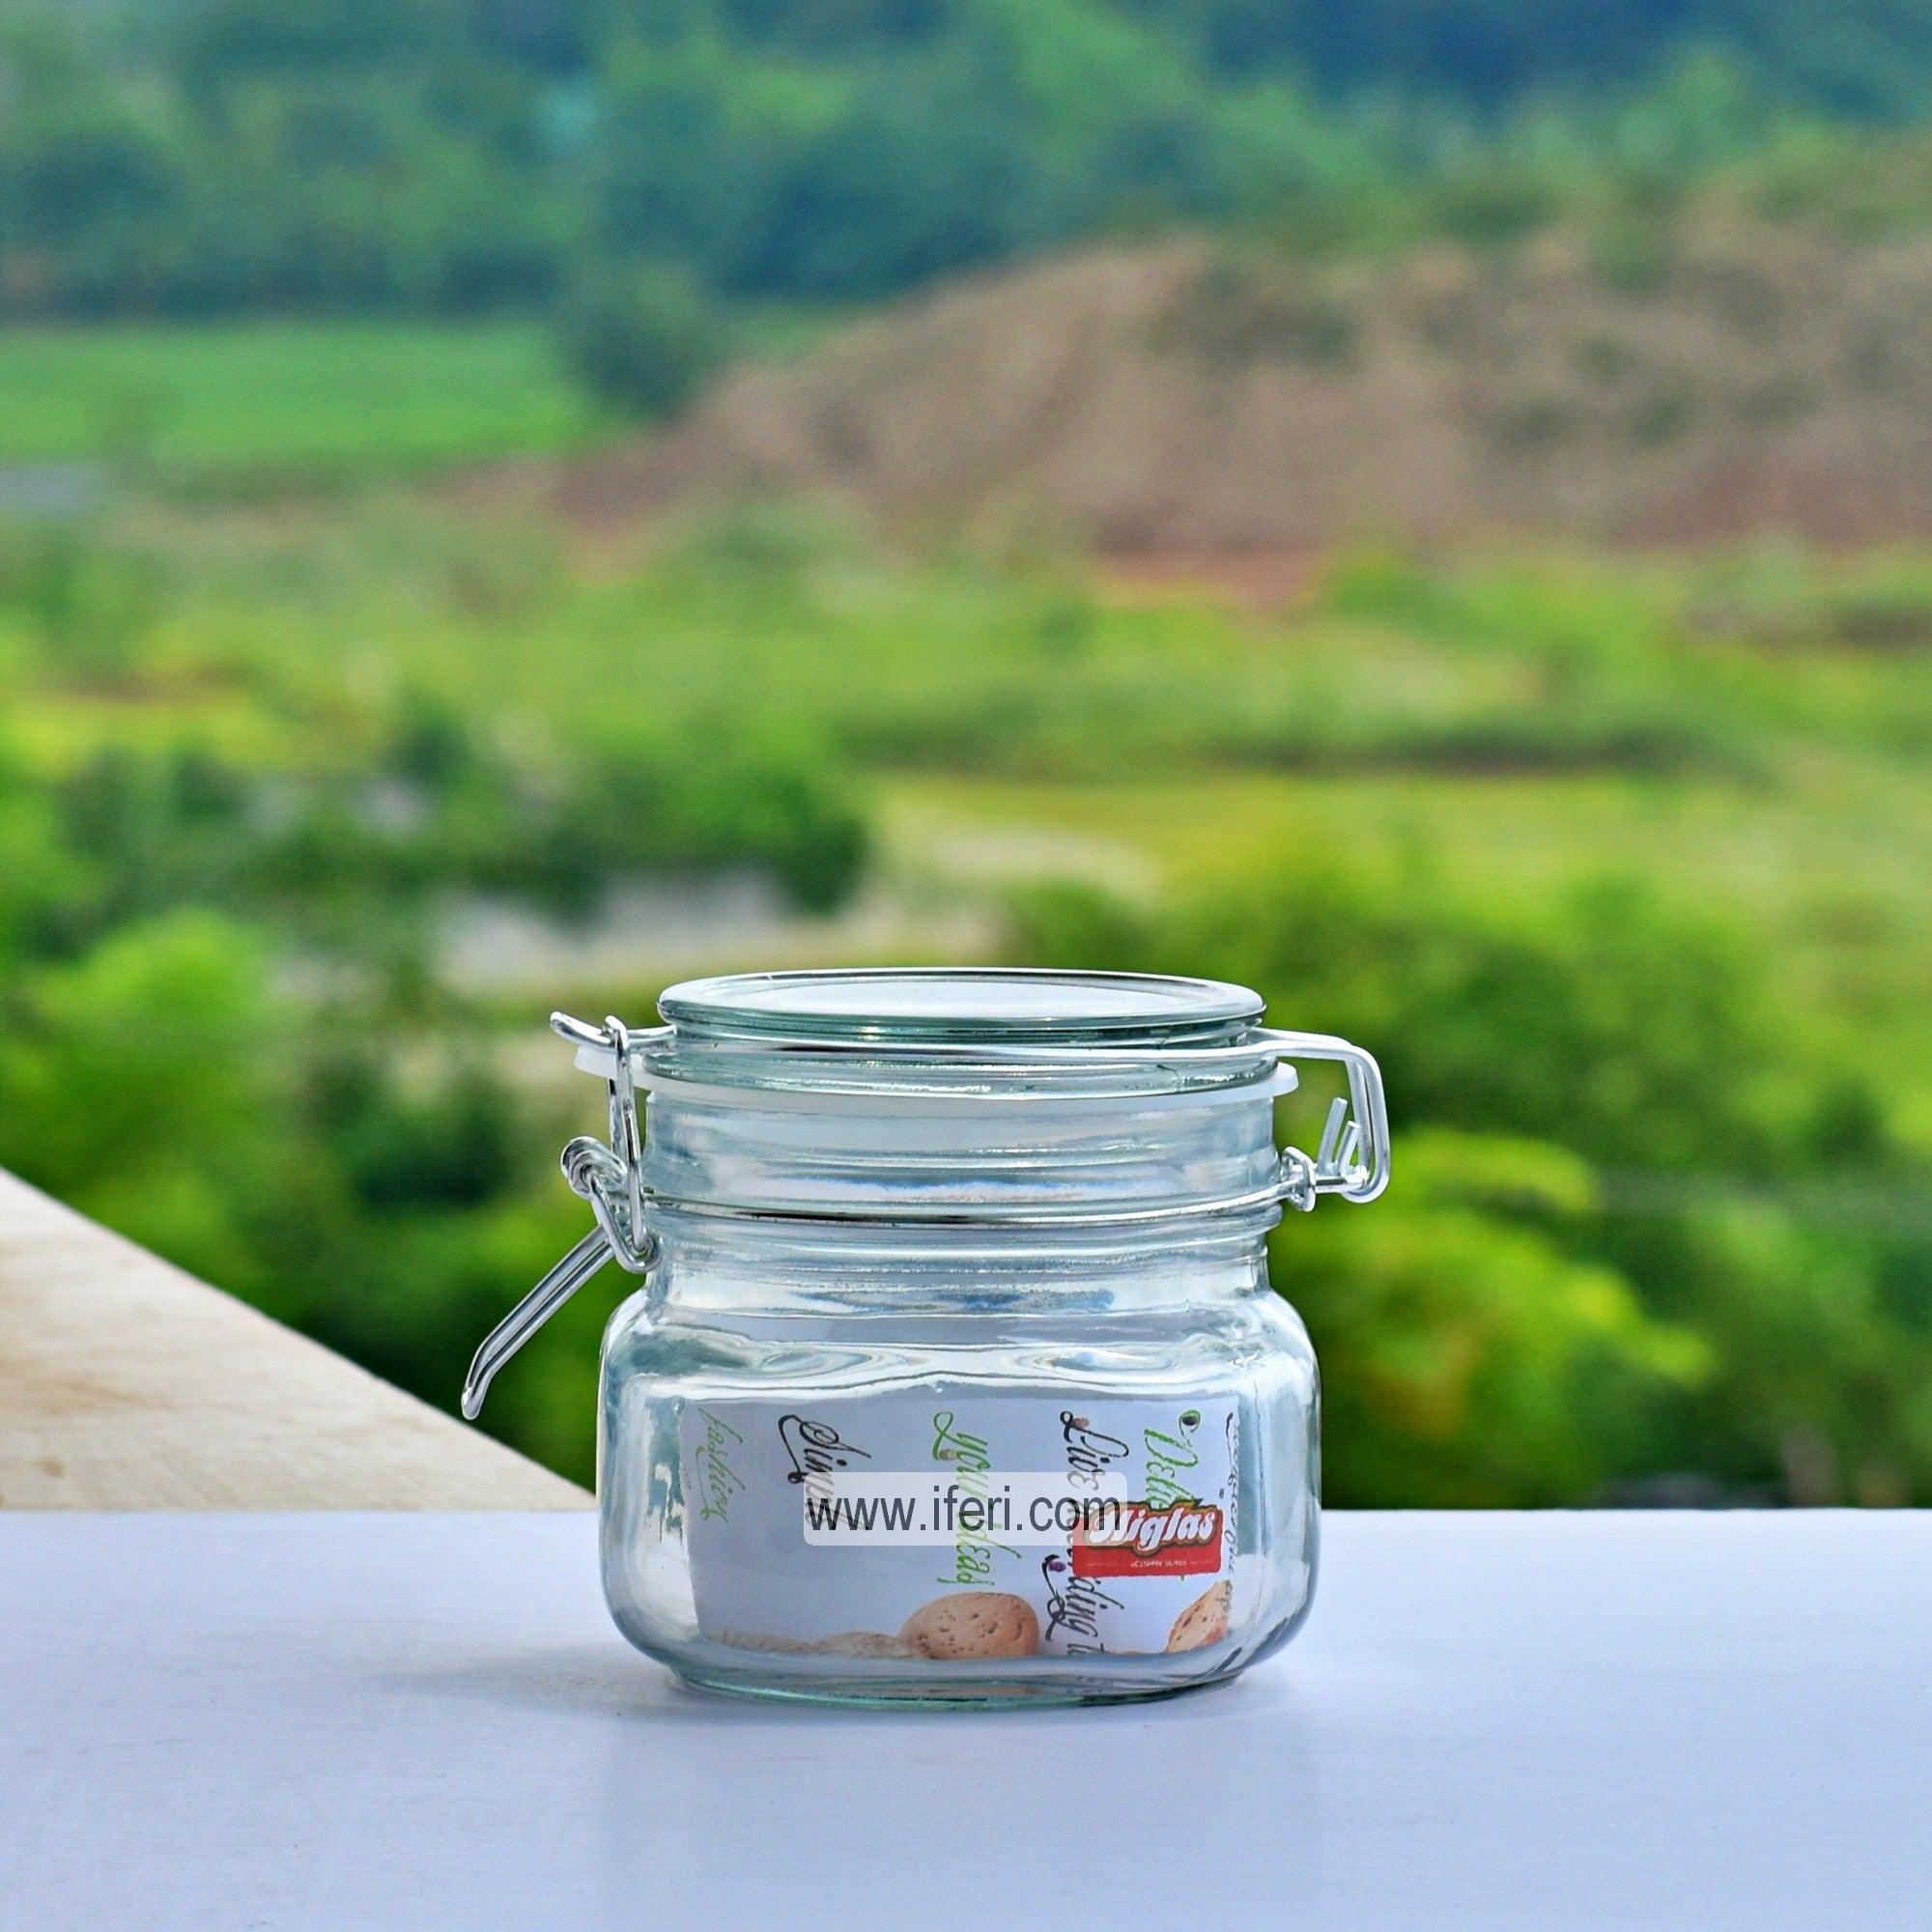 500ml Food Grade Airtight Glass Jar UT21060 Price in Bangladesh - iferi.com